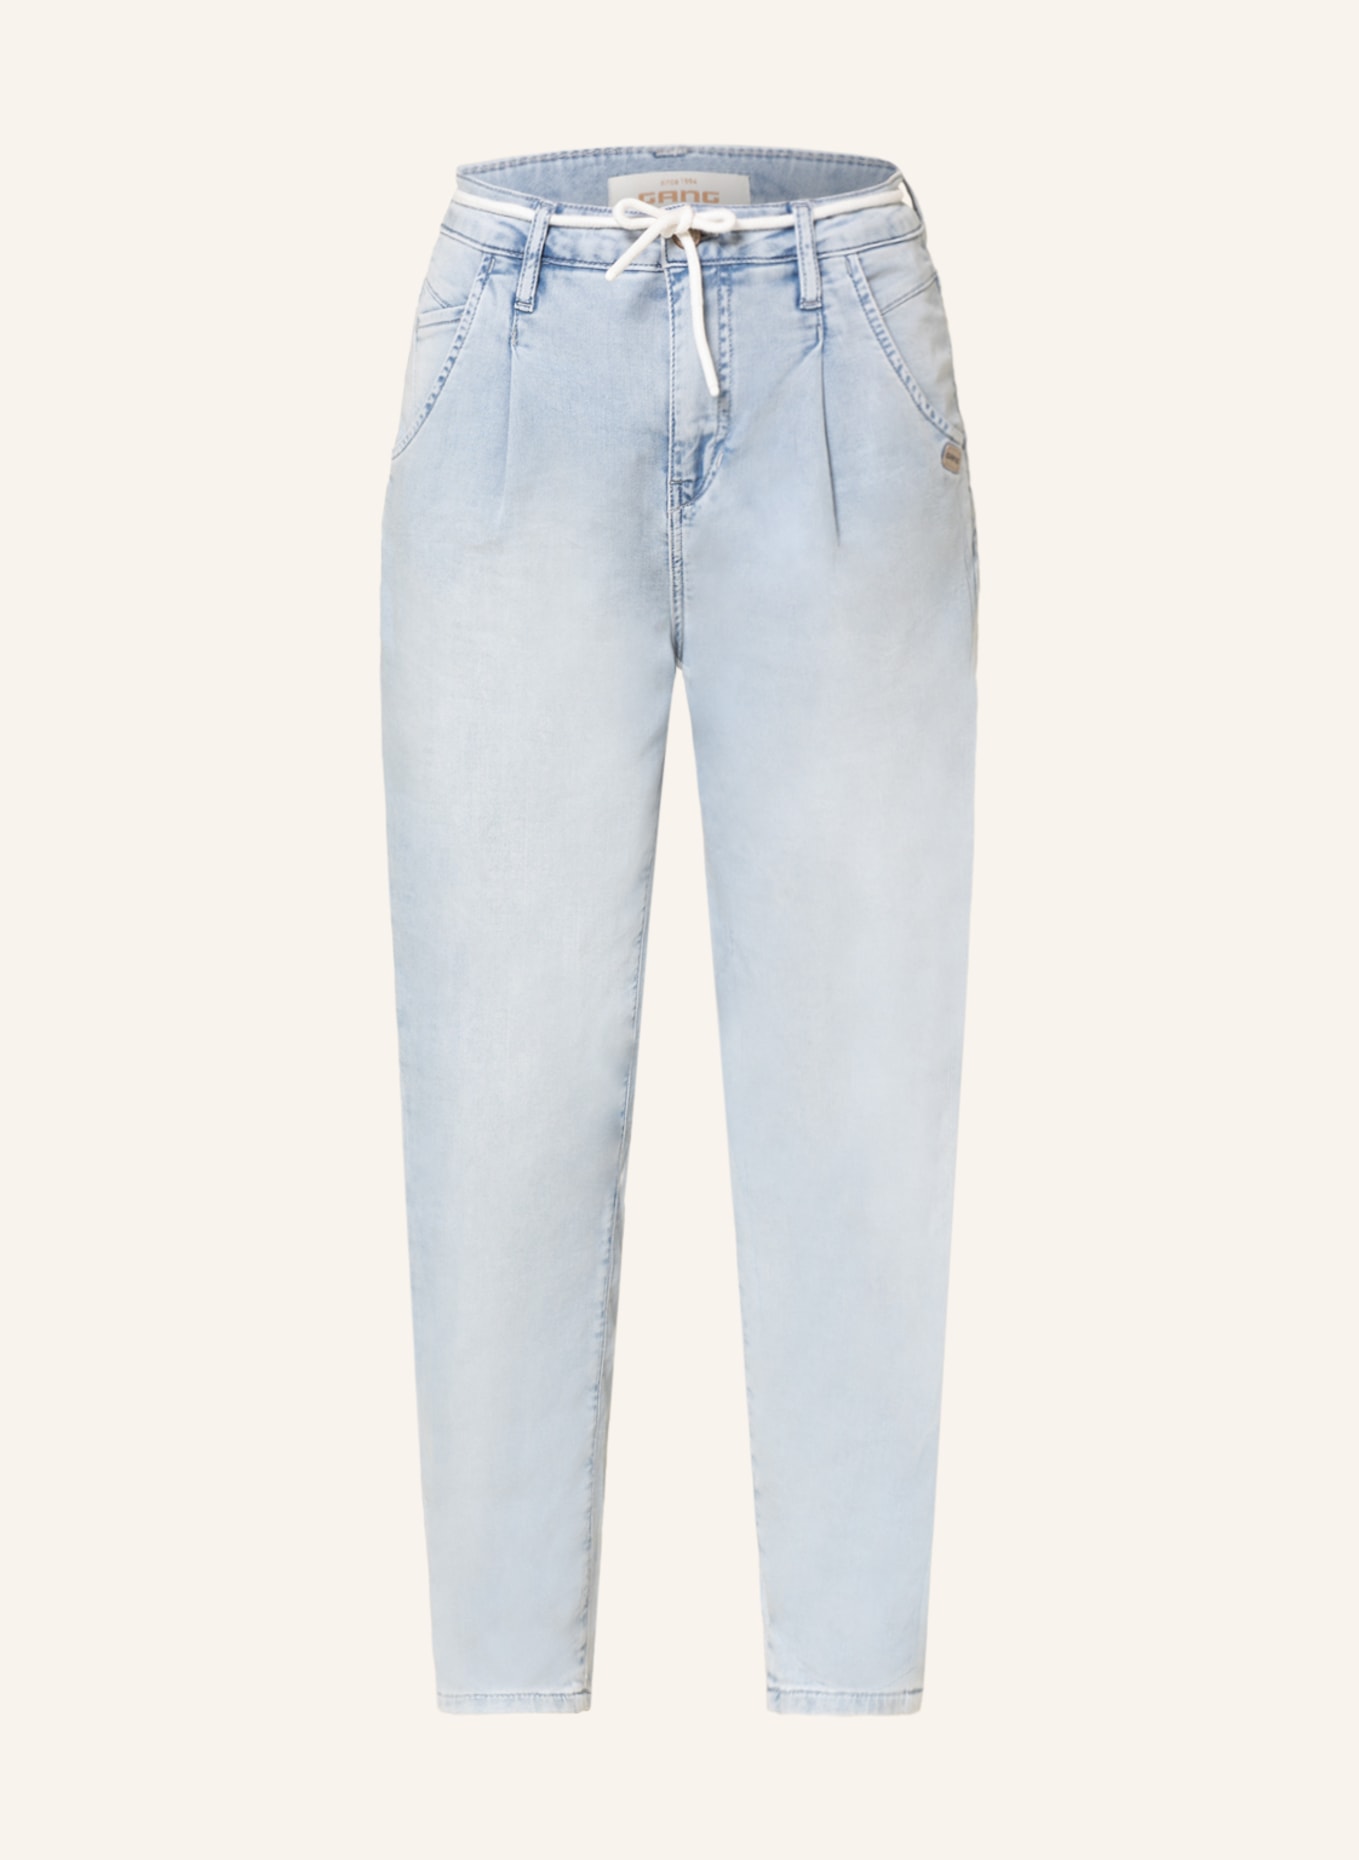 GANG Jeans SILVIA im Jogging-Stil , Farbe: 7675 summer ice blue (Bild 1)